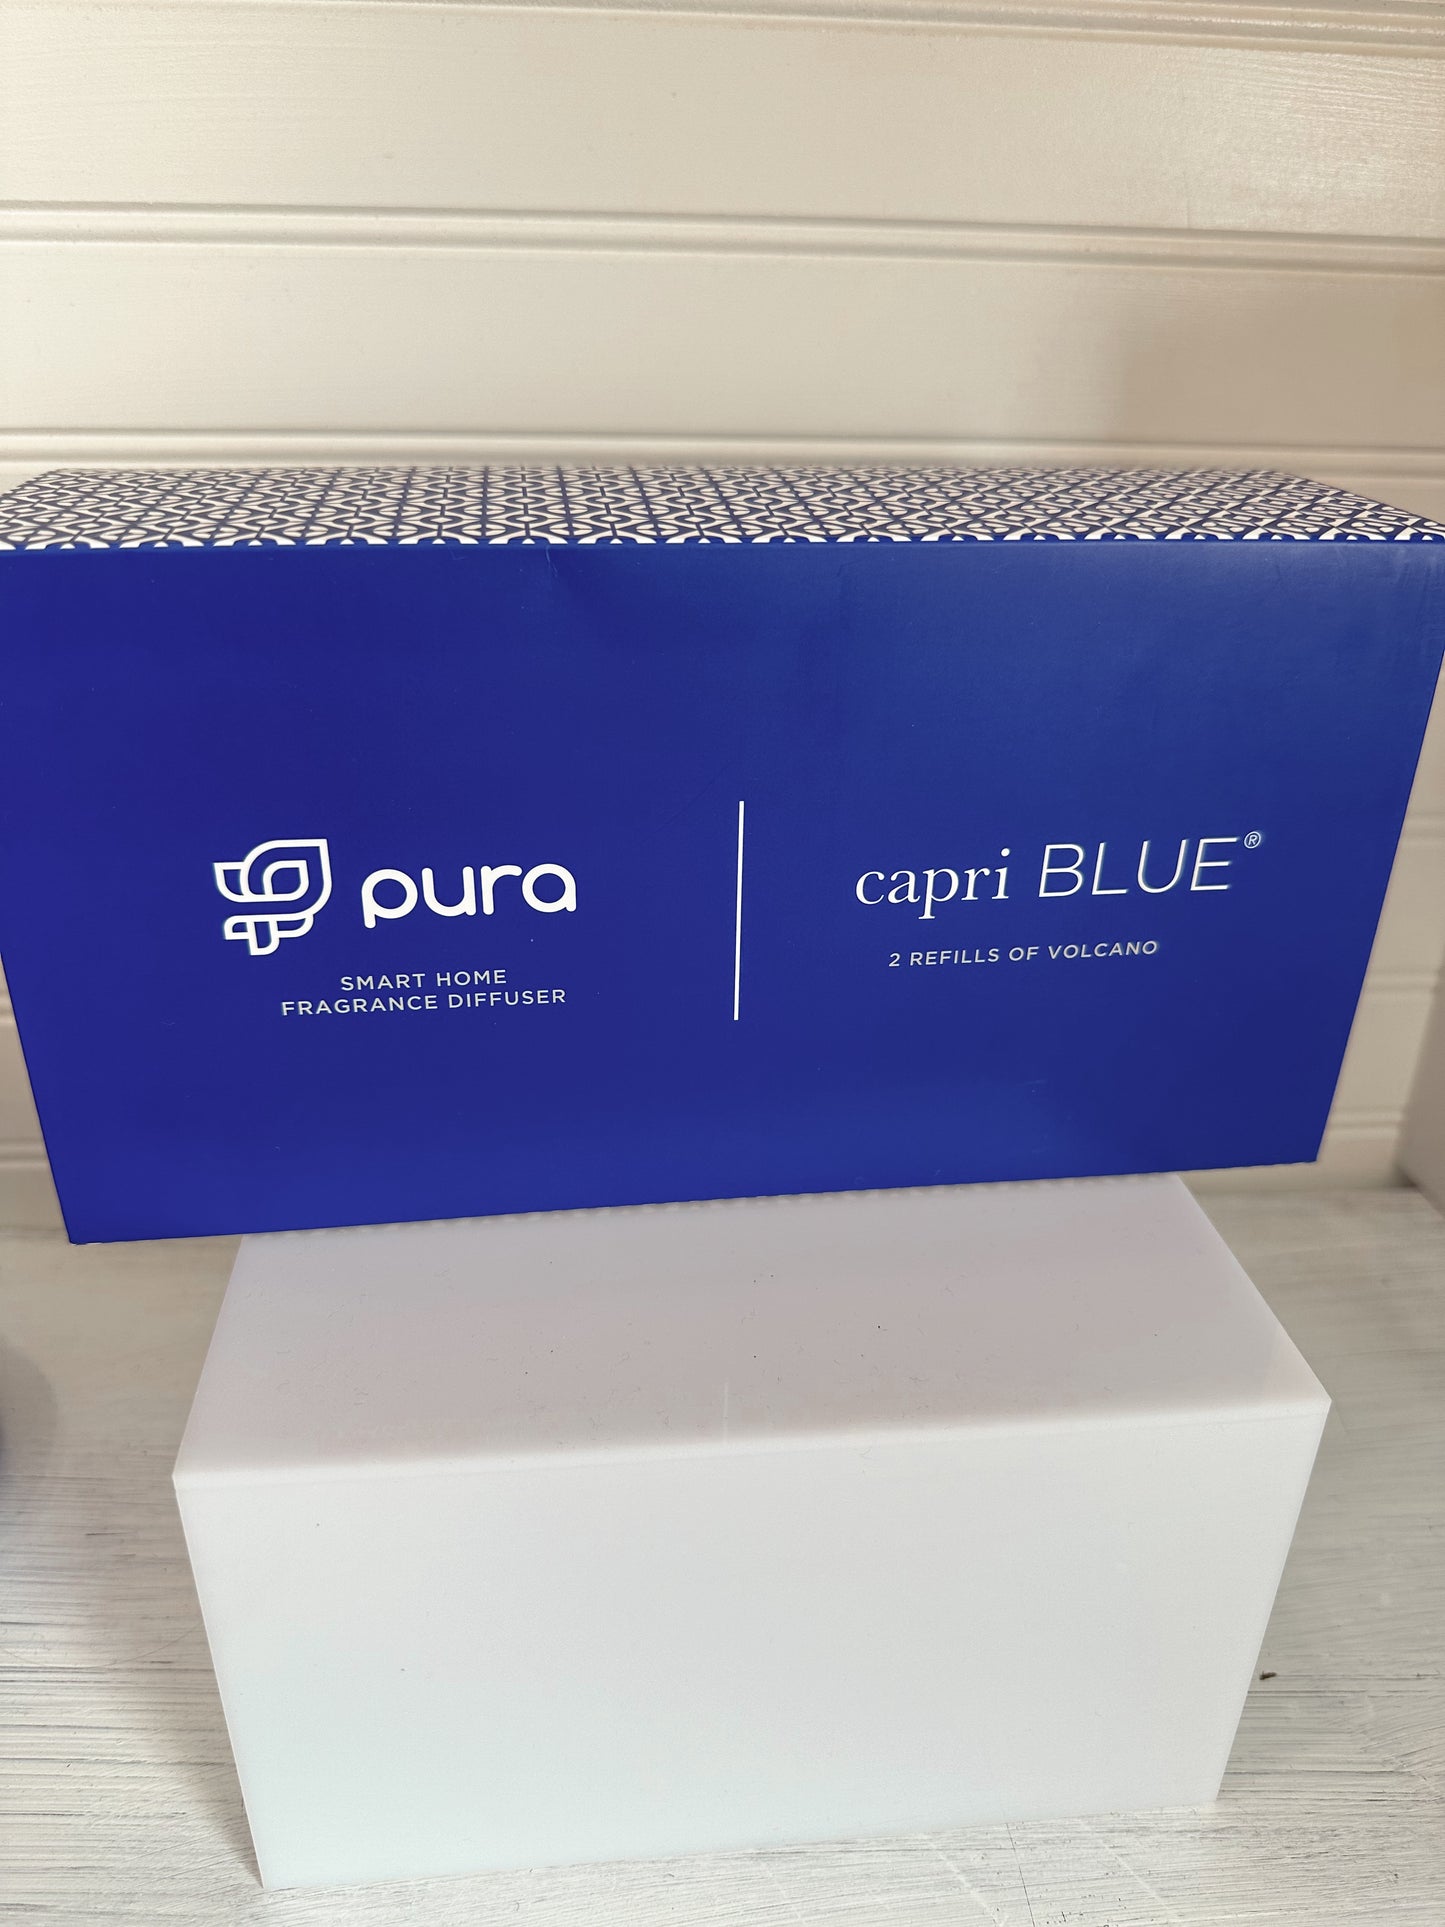 Capri Blue Pura Home Diffuser